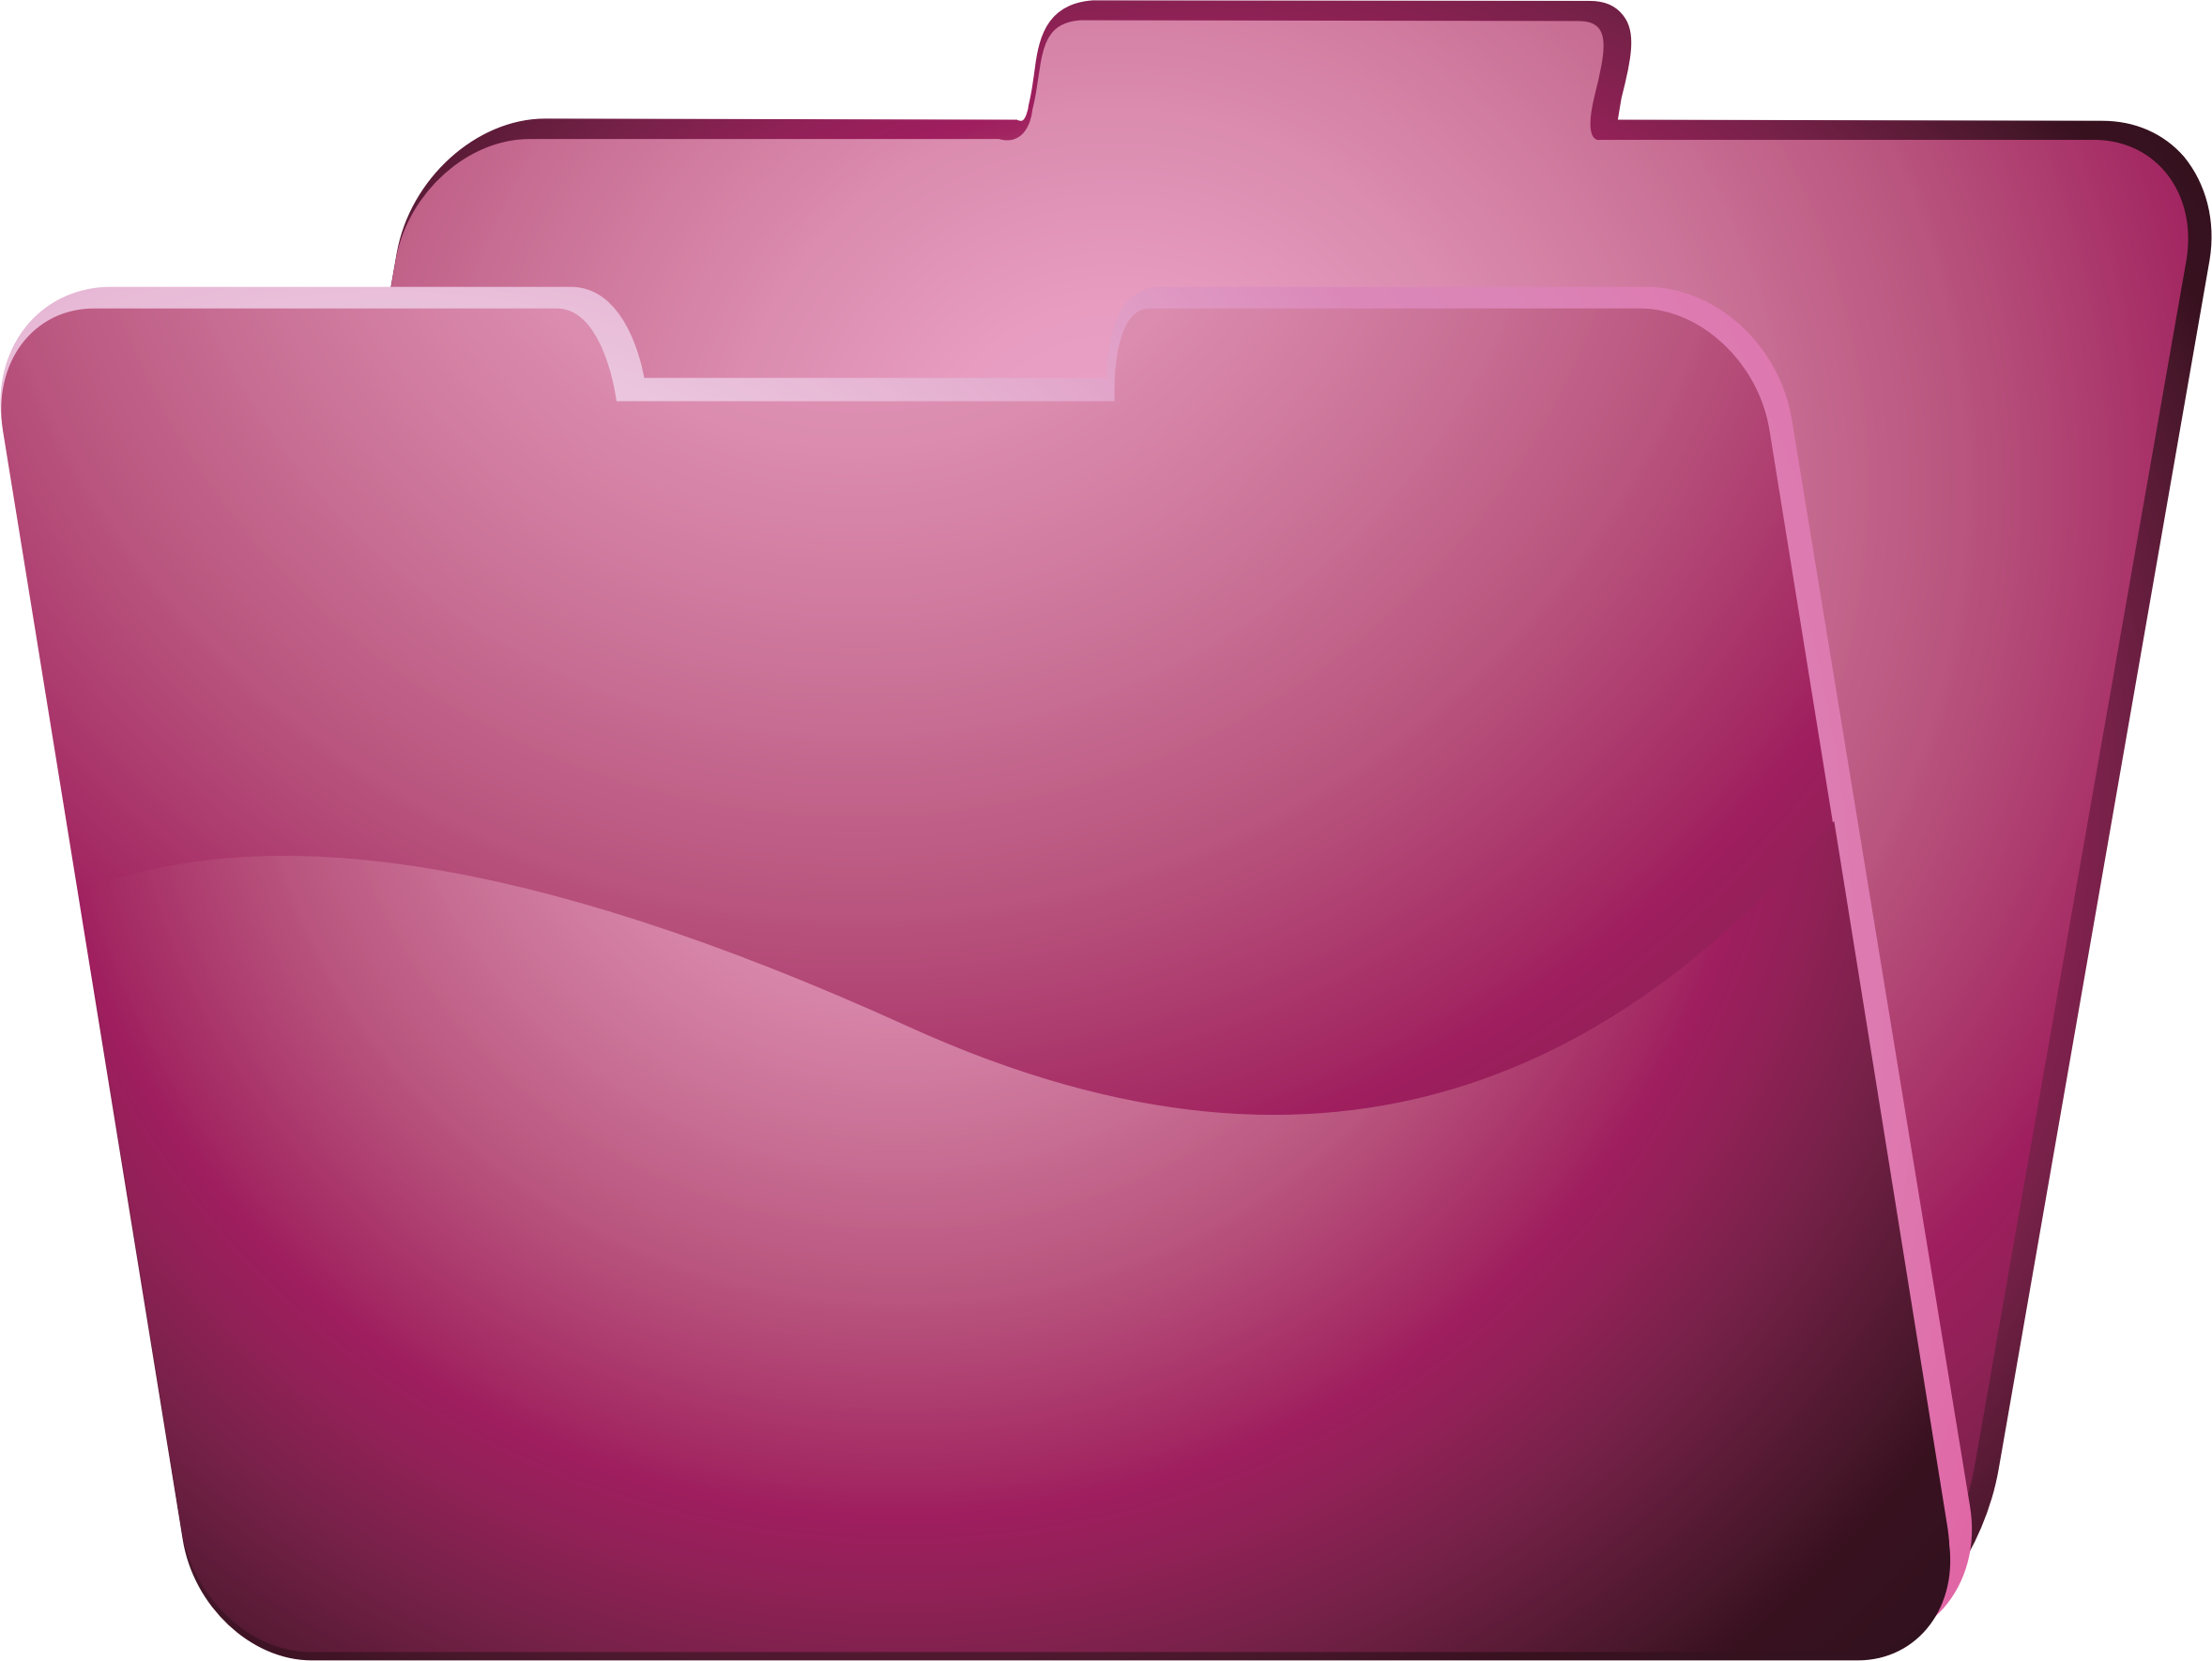 Fucsia by ilnanny icon. Folder clipart pink